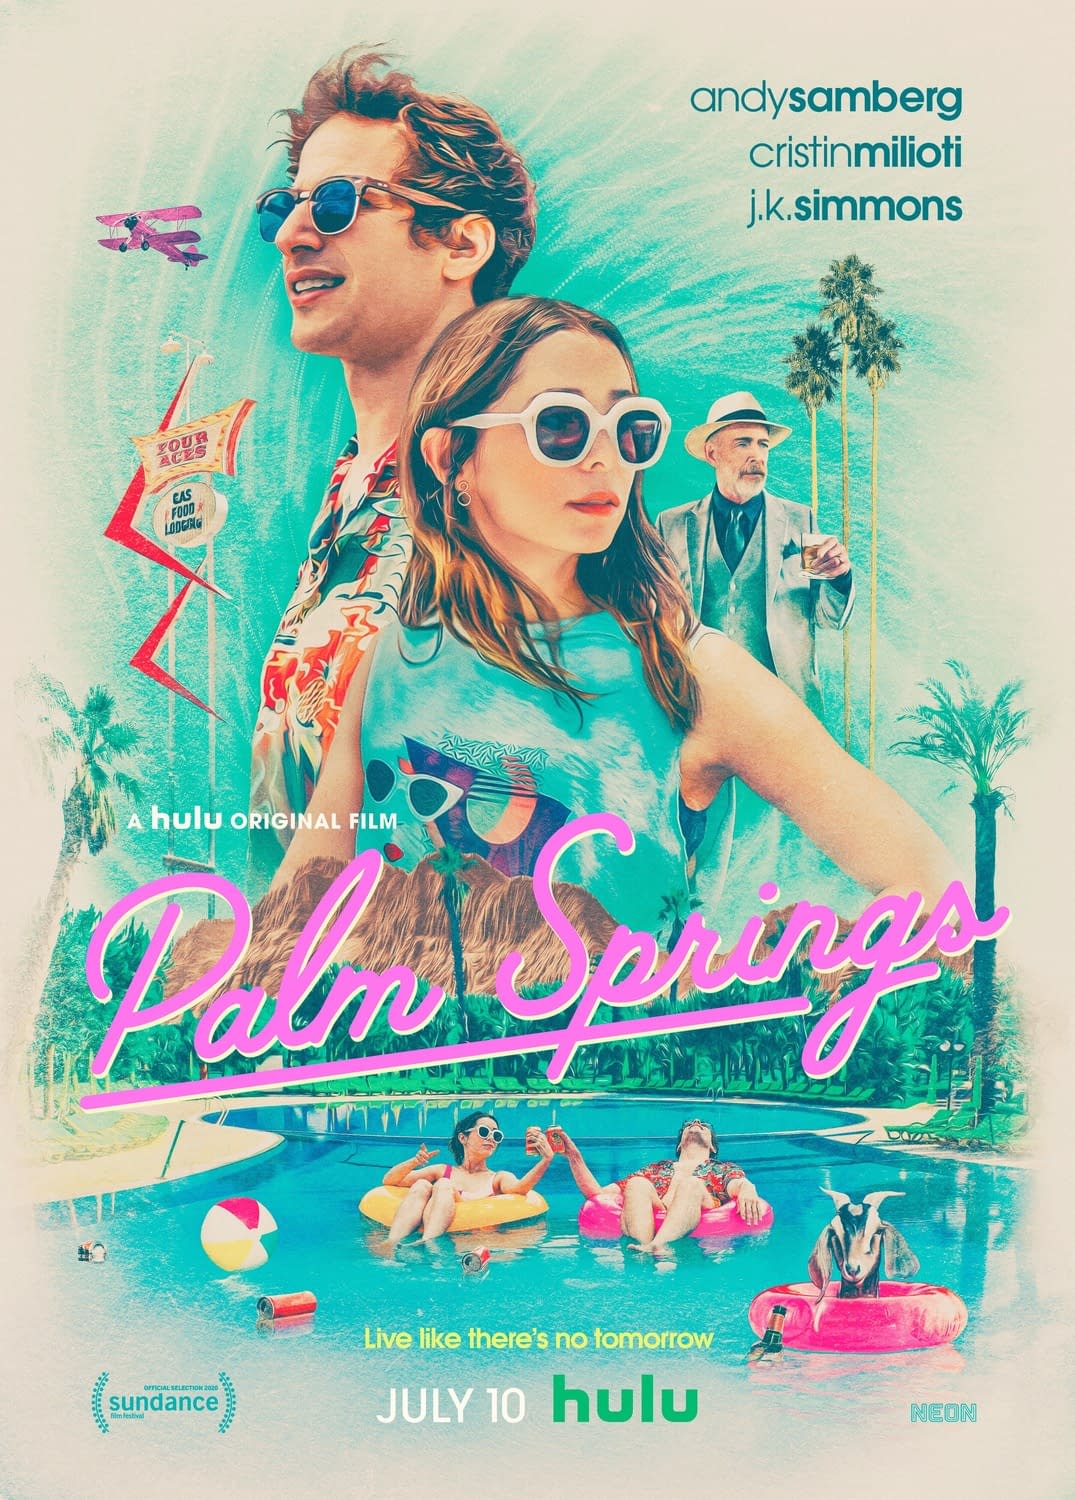 New Palm Springs Poster Revealed Ahead Of Next Week's Debut On Hulu